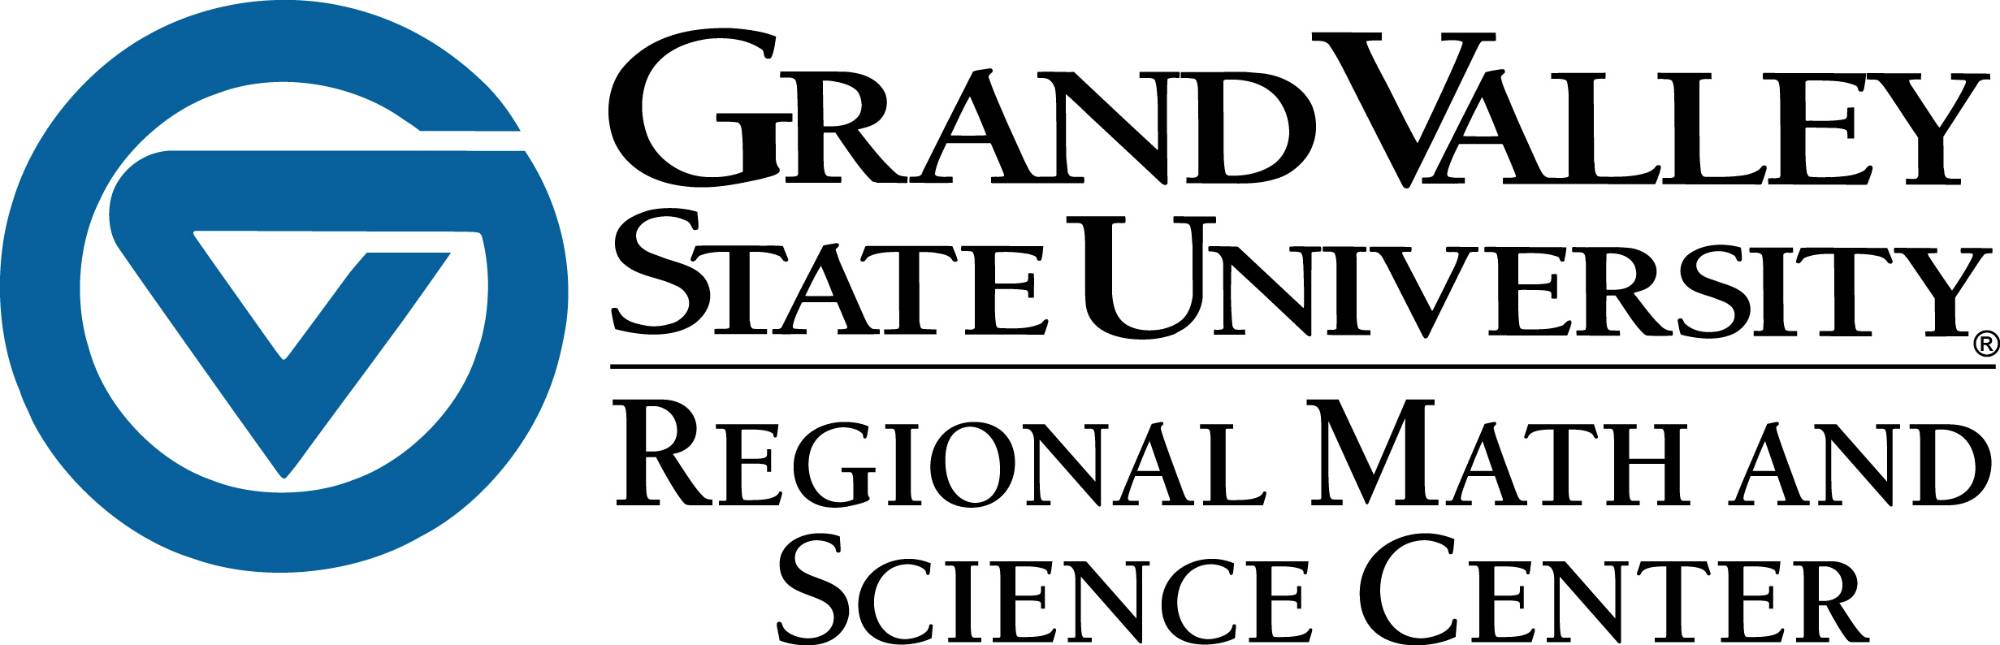 GVSU Regional Math & Science Center logo